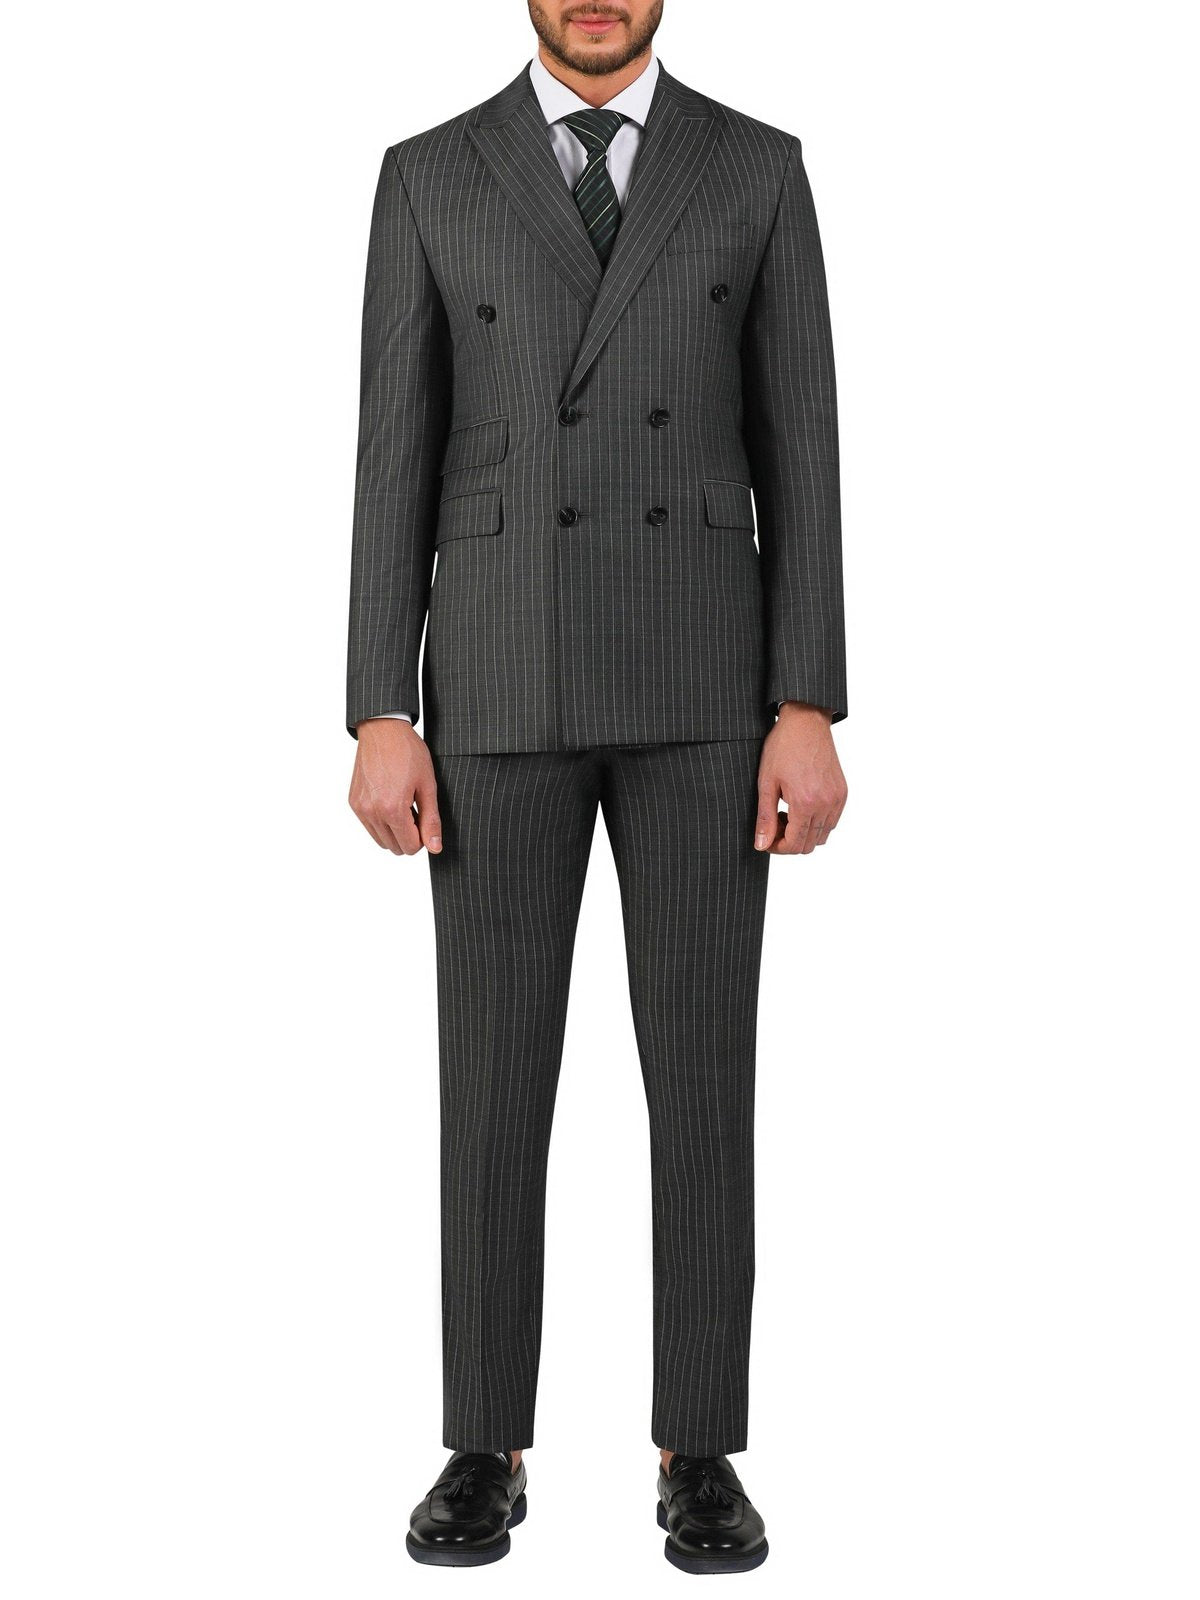 Di'nucci SUITS 38R Di'nucci Gray With Light Blue Stripe Double Breasted Suit